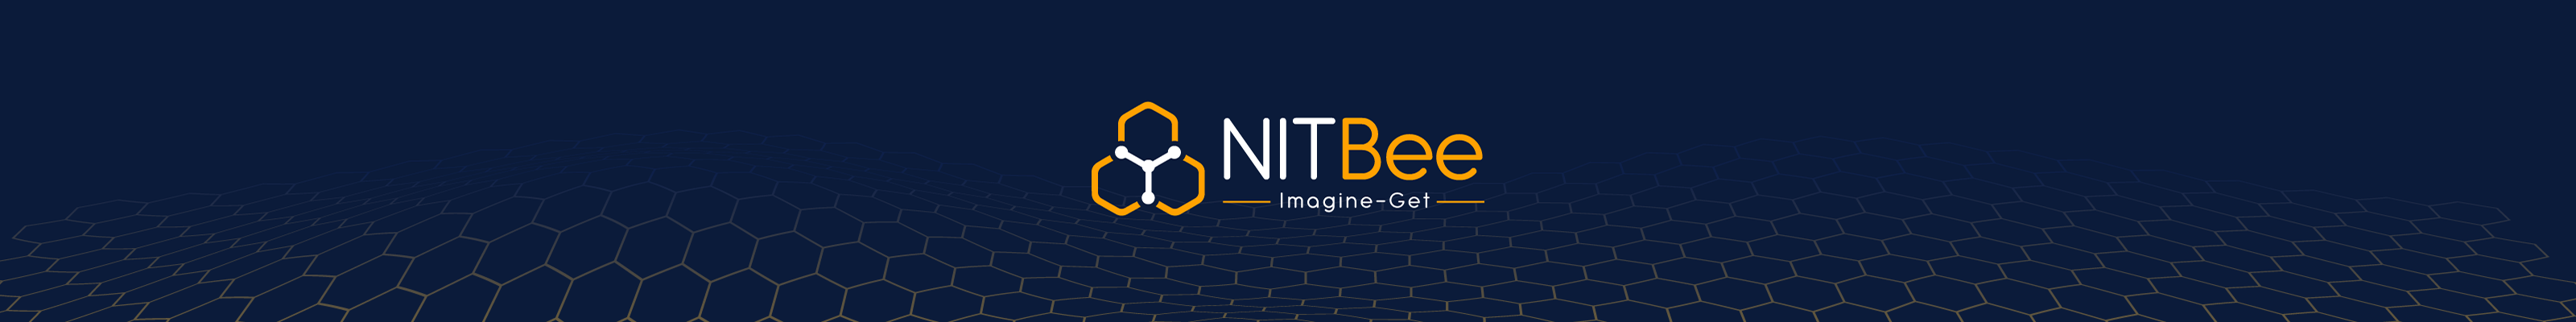 NITBee co's profile banner